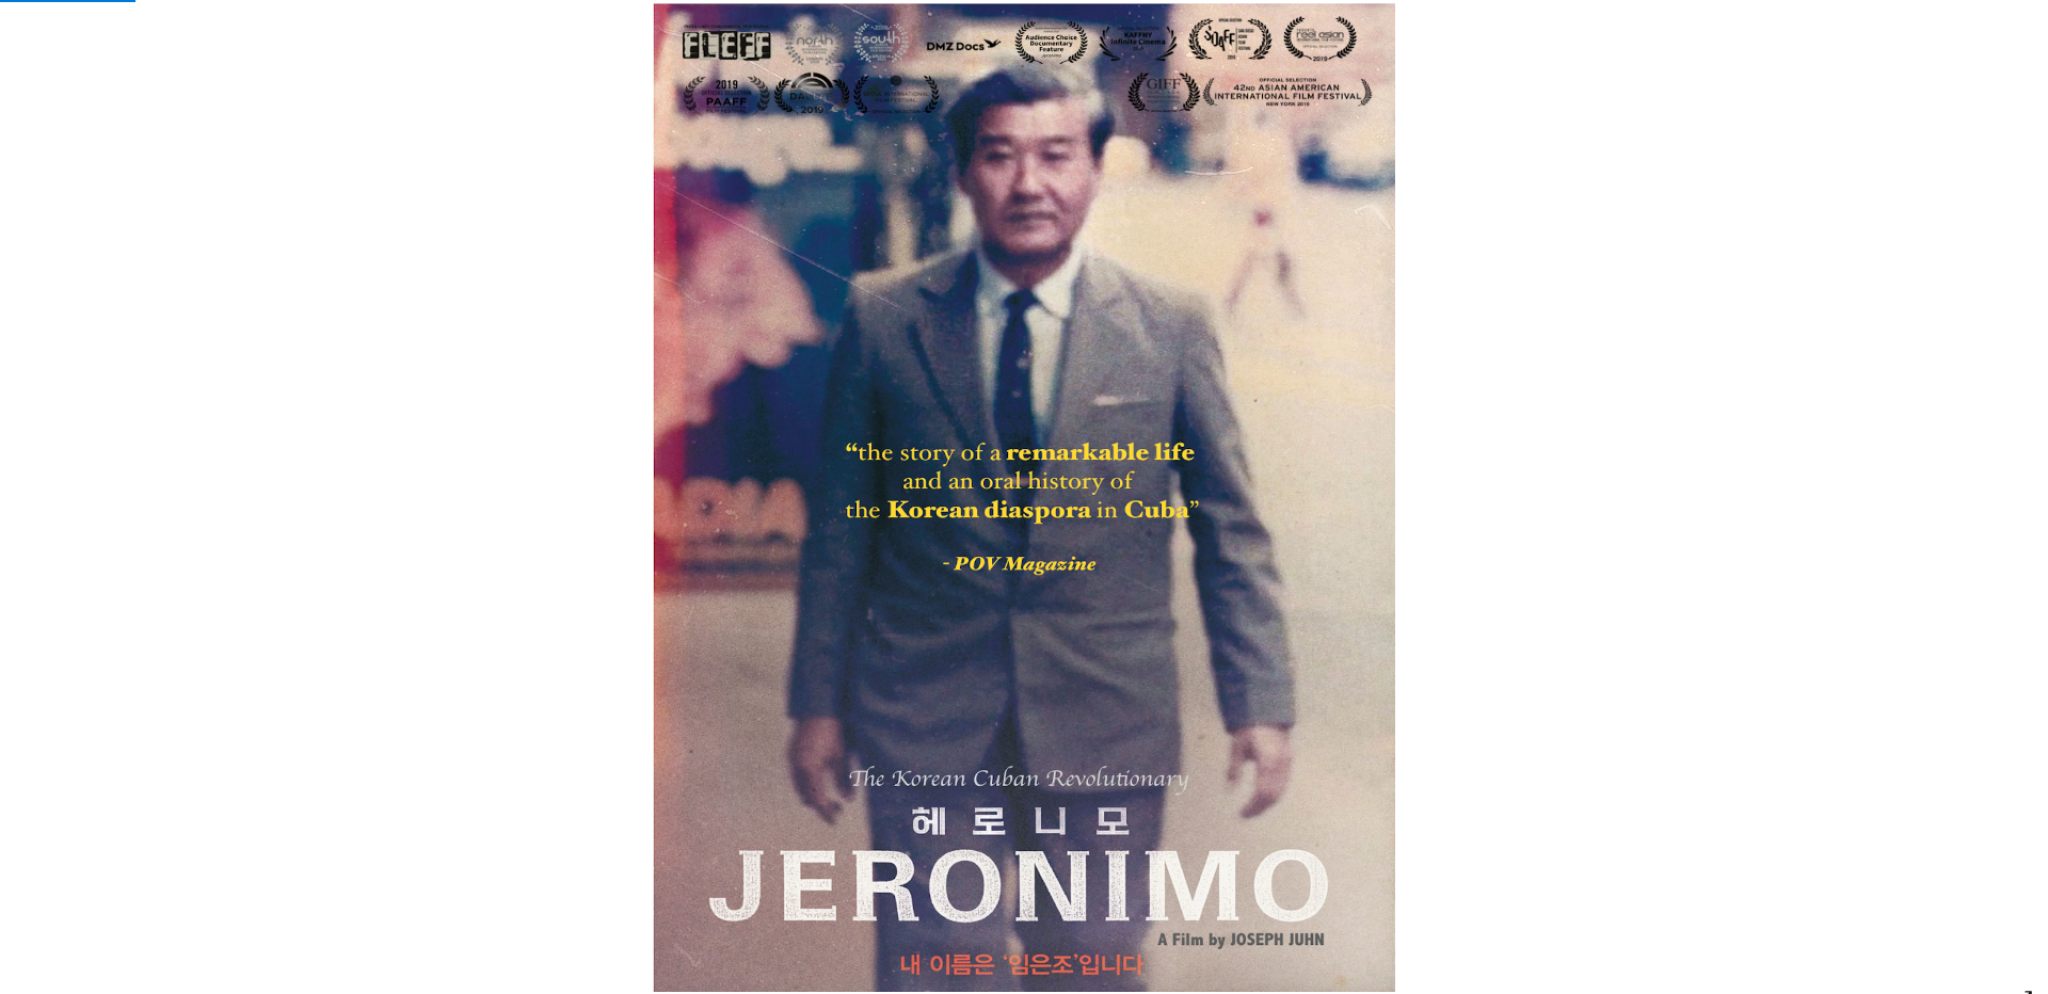 Public Film Screening (Jeronimo) with Director Joseph Juhn